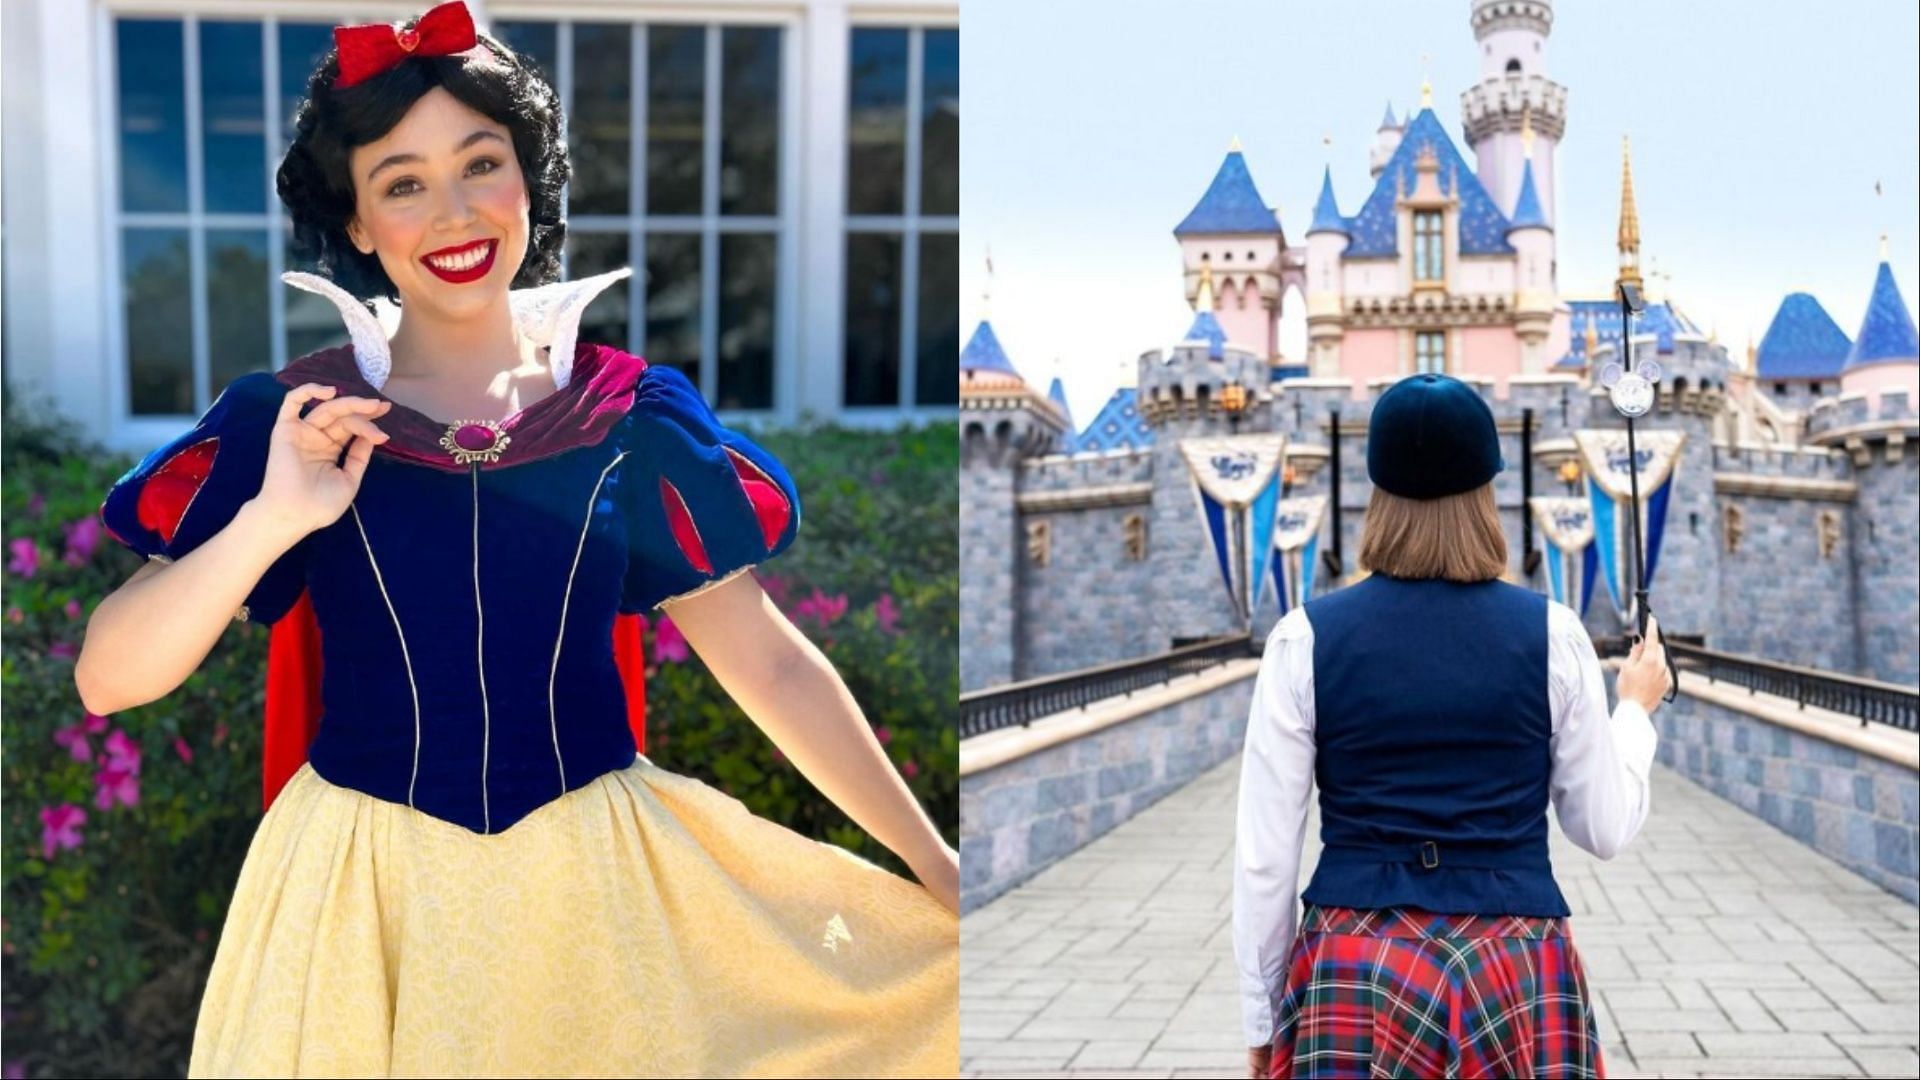 Claims of Disney suspending Snow White from theme park go viral (Image via sophiadottir and disneyparks/Instagram)